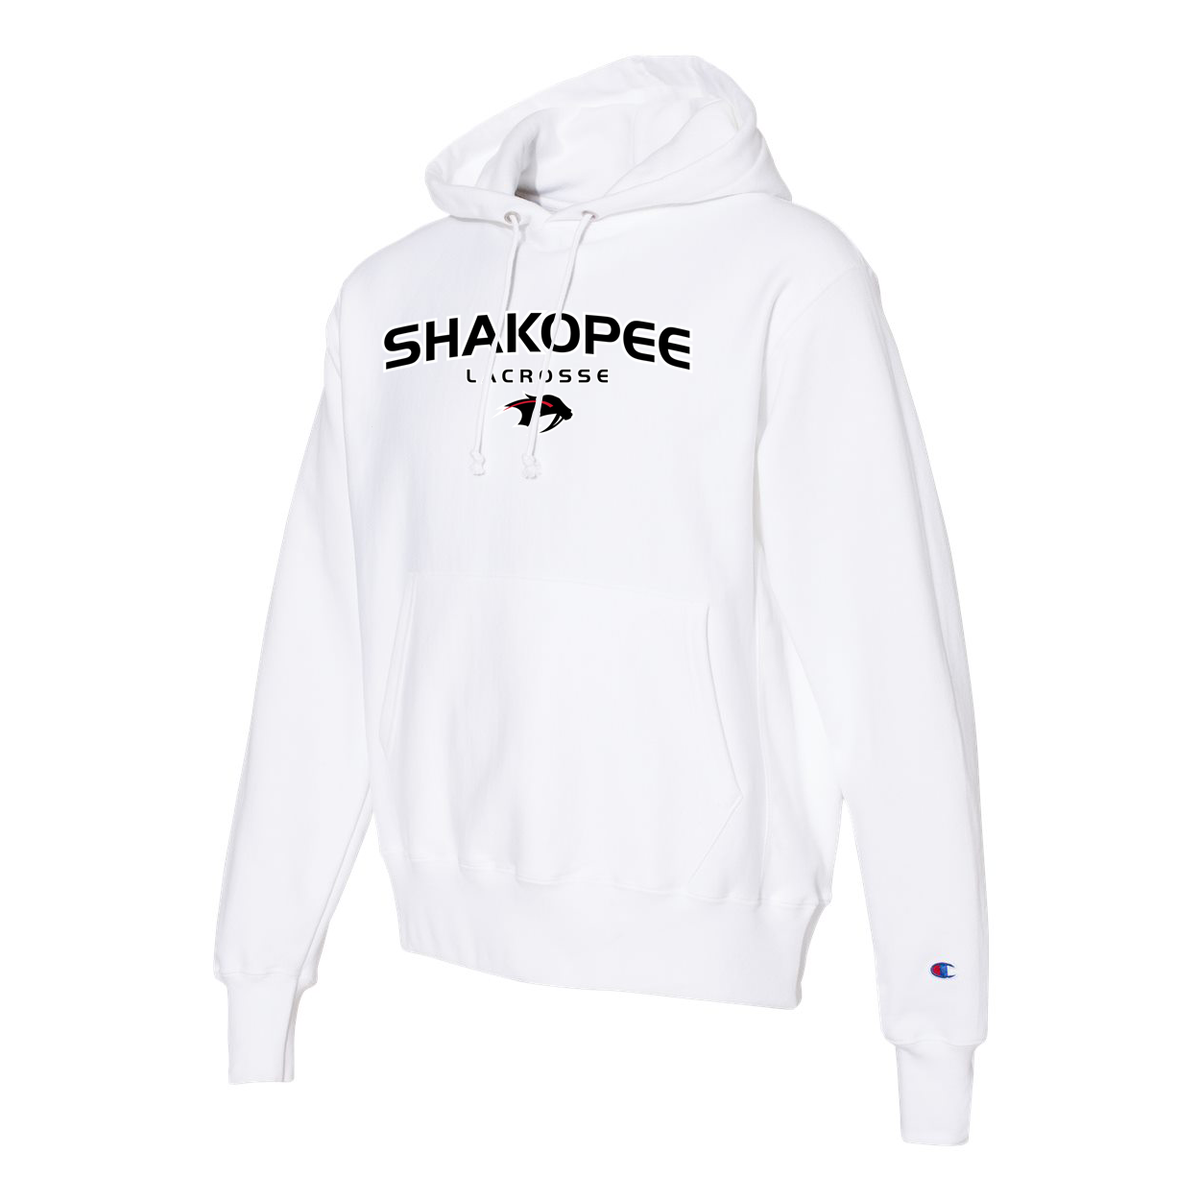 Shakopee Lacrosse Champion Sweatshirt